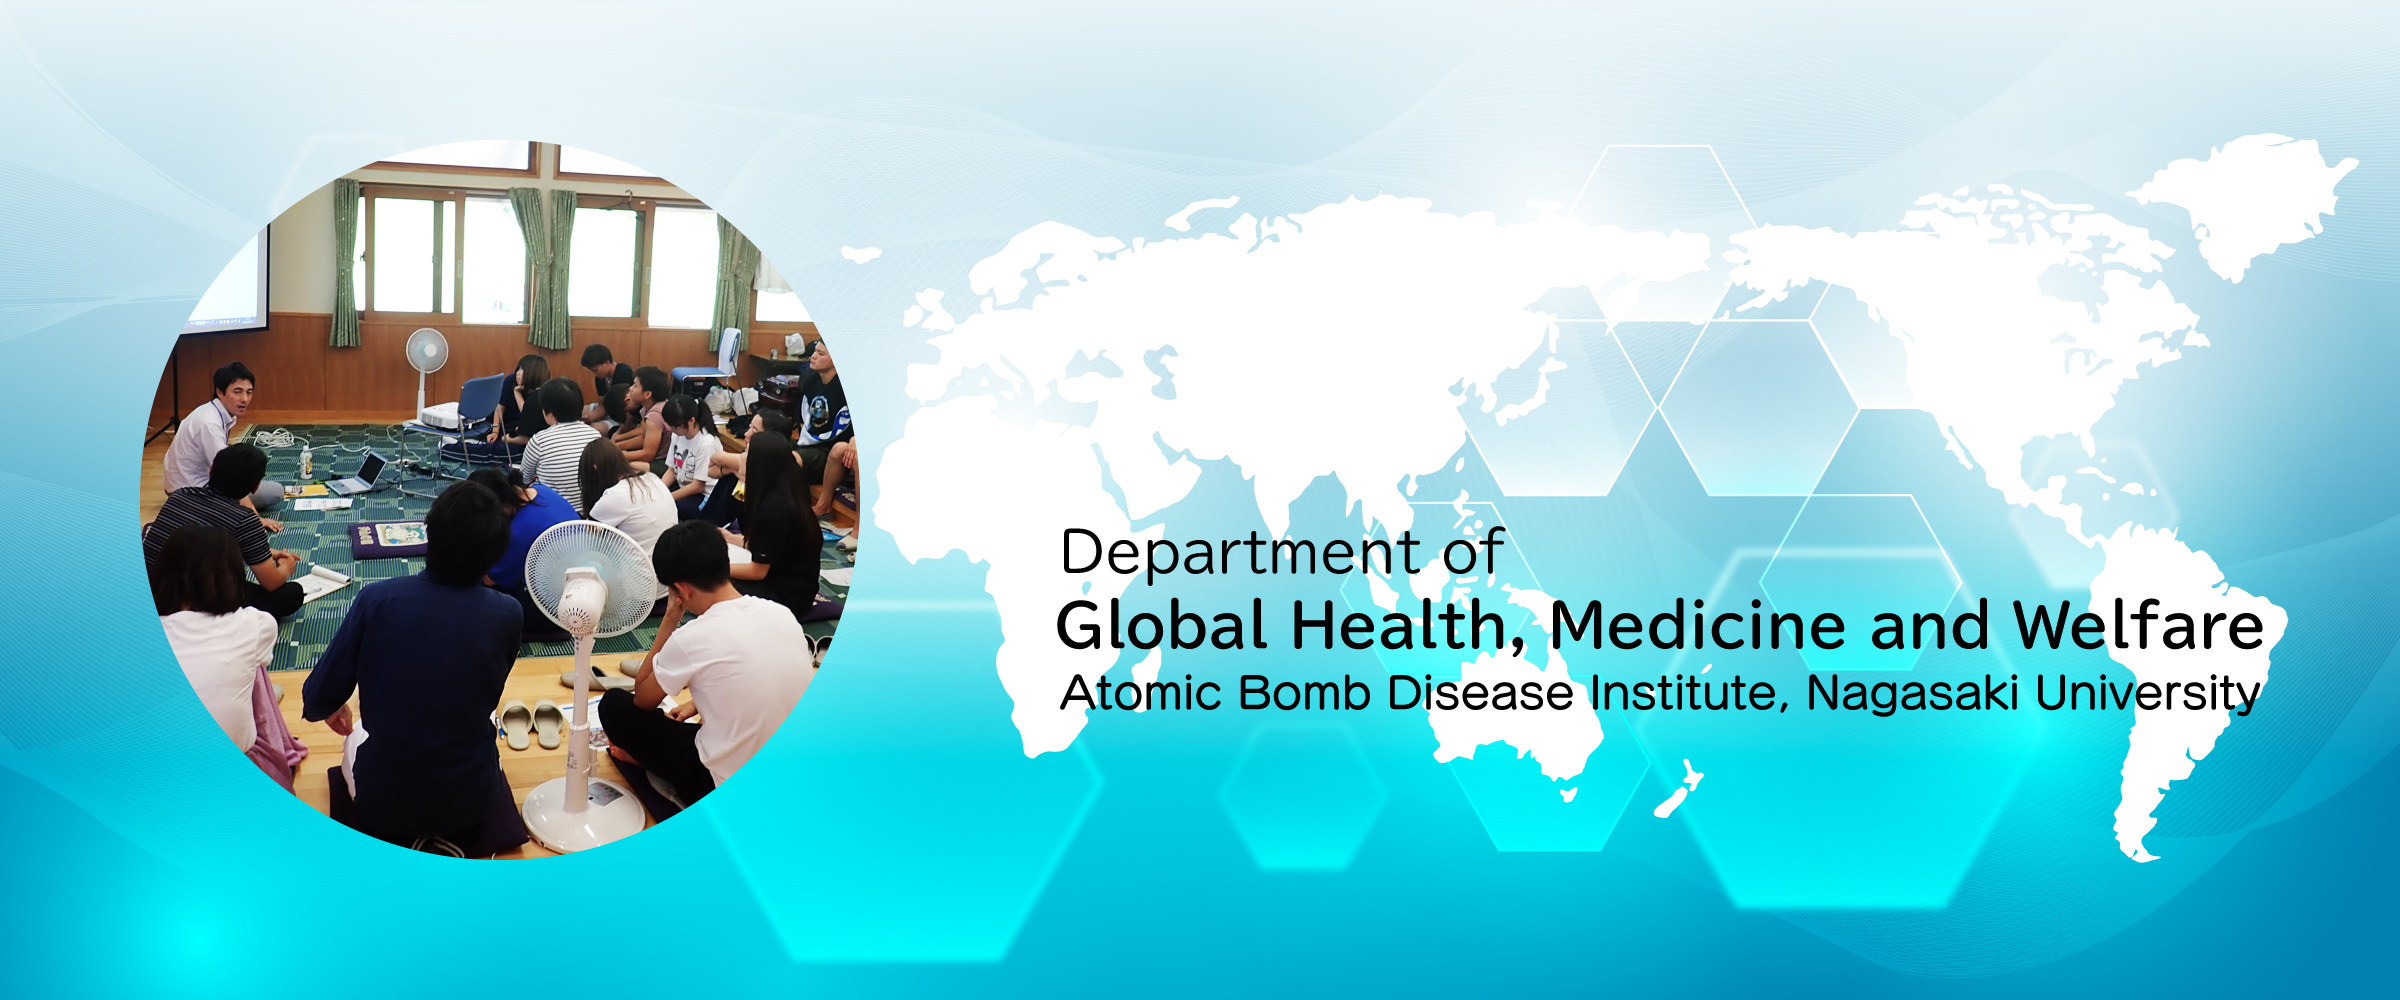 Department of Global Health, Medicine and Welfare, Atomic Bomb Disease Institute, Nagasaki University